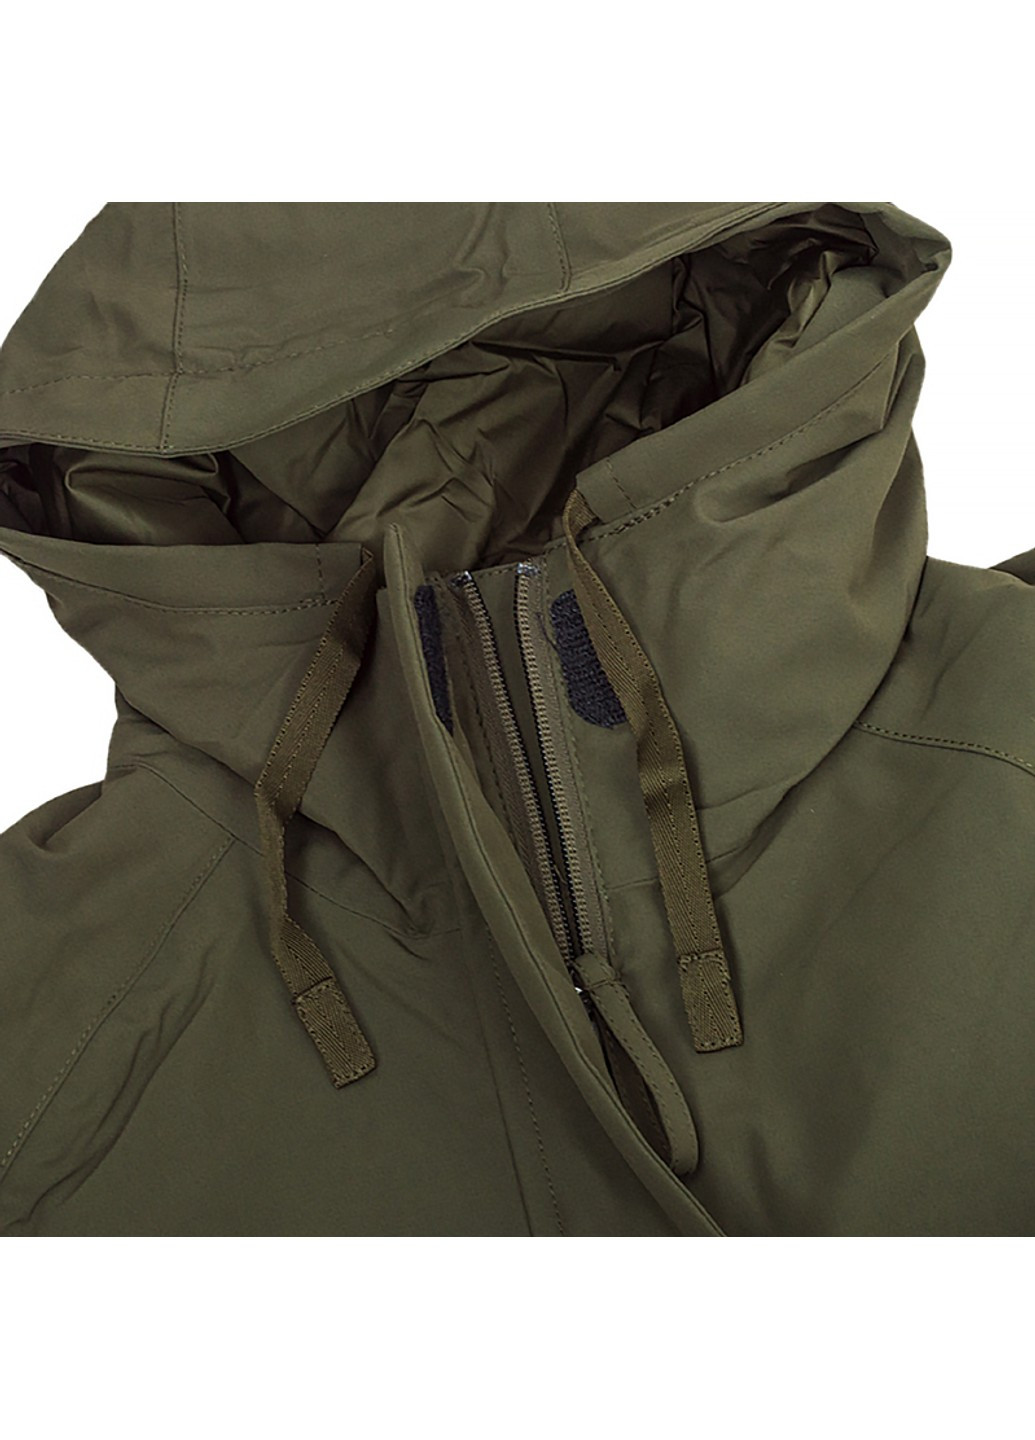 Оливковая (хаки) демисезонная куртка w mono material ins rain coat Helly Hansen